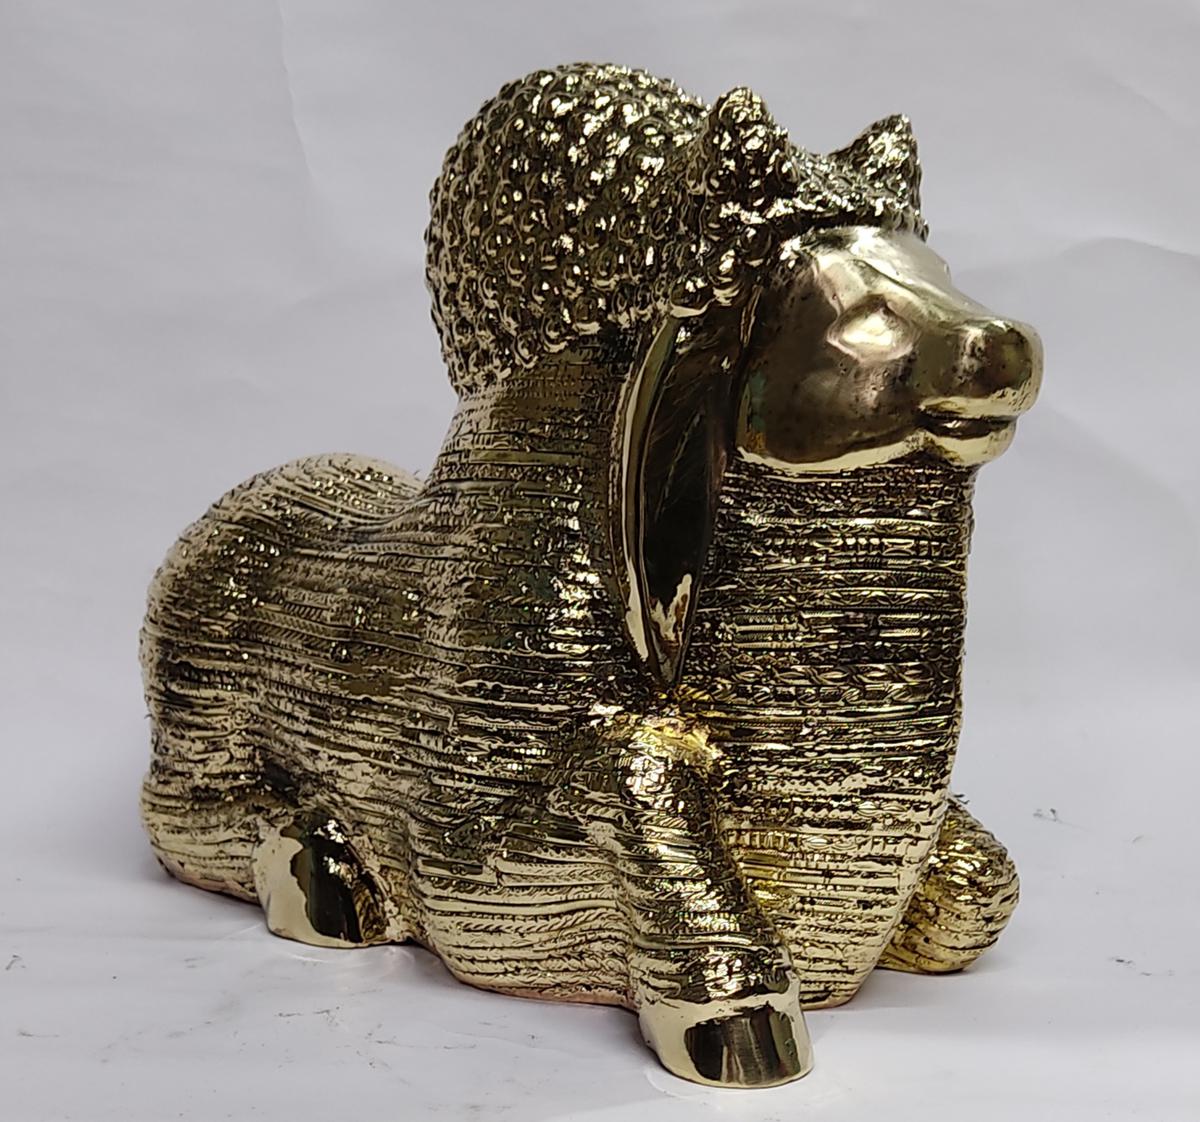 Nandi sculpture in brass and bronze by Ratan Saha